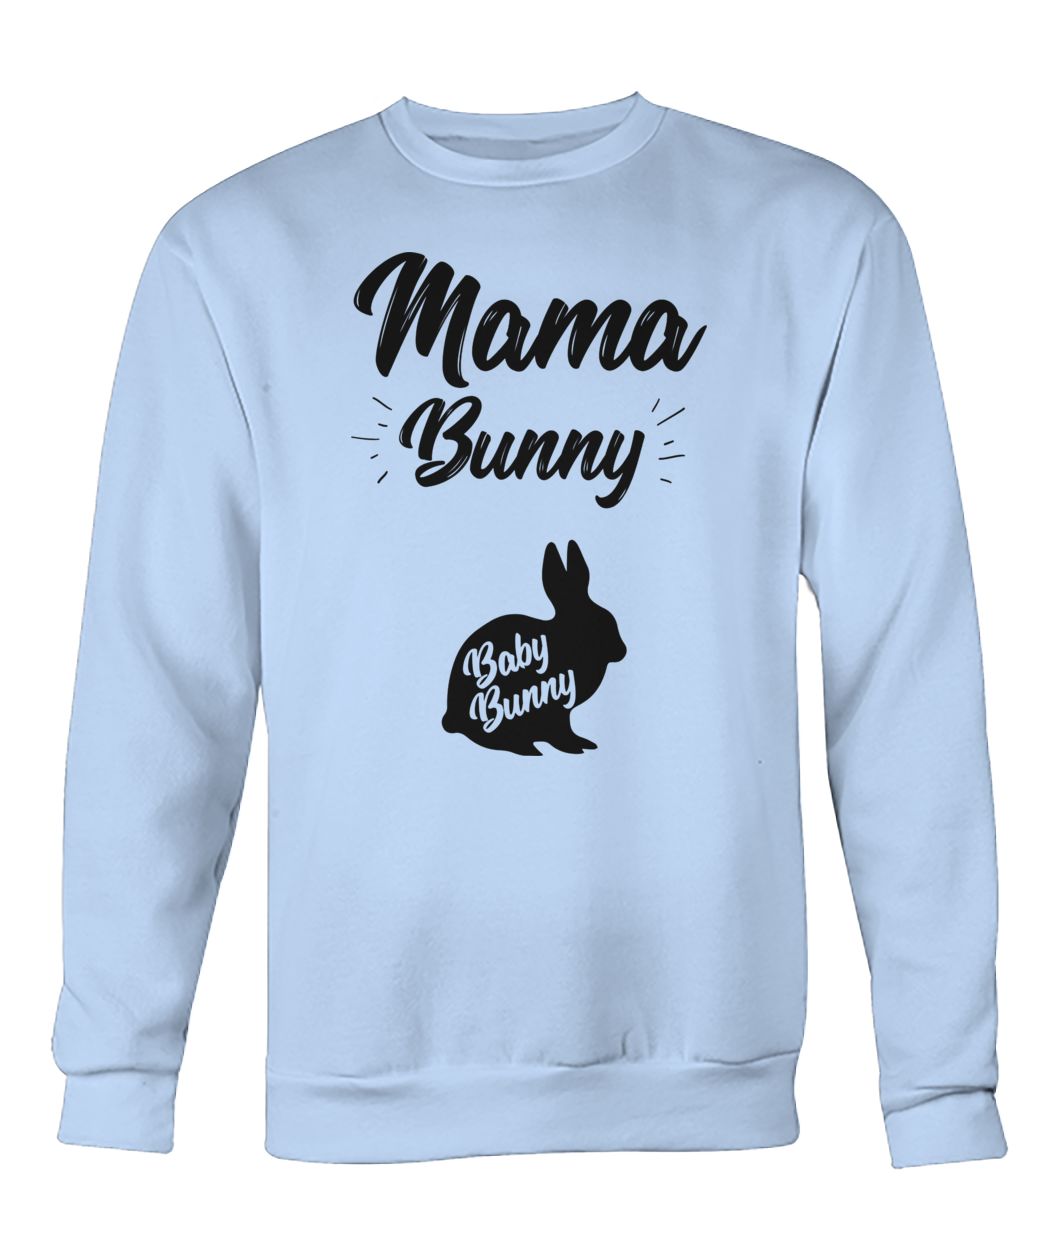 Mama bunny baby bunny easter pregnancy crew neck sweatshirt